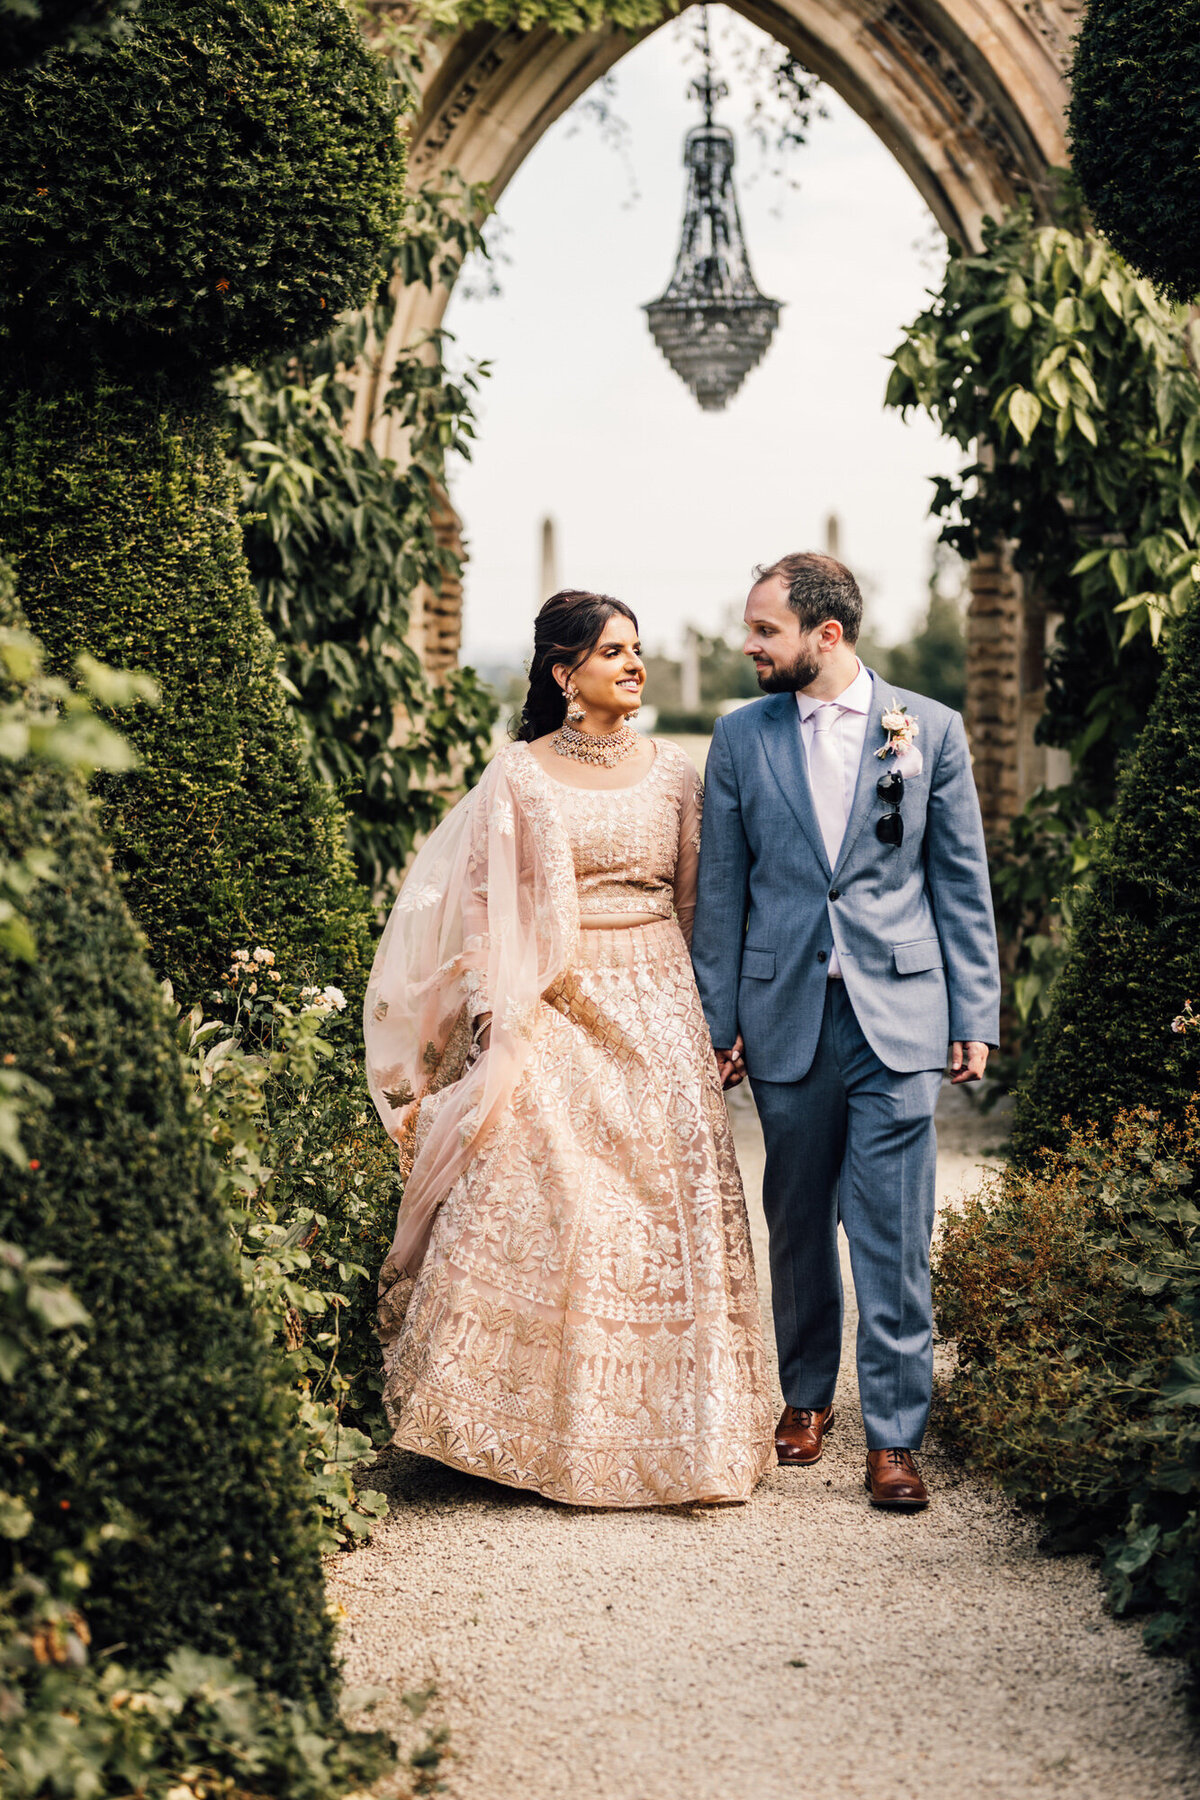 Bride of Indian Heritage walking through lush gardens with Groom